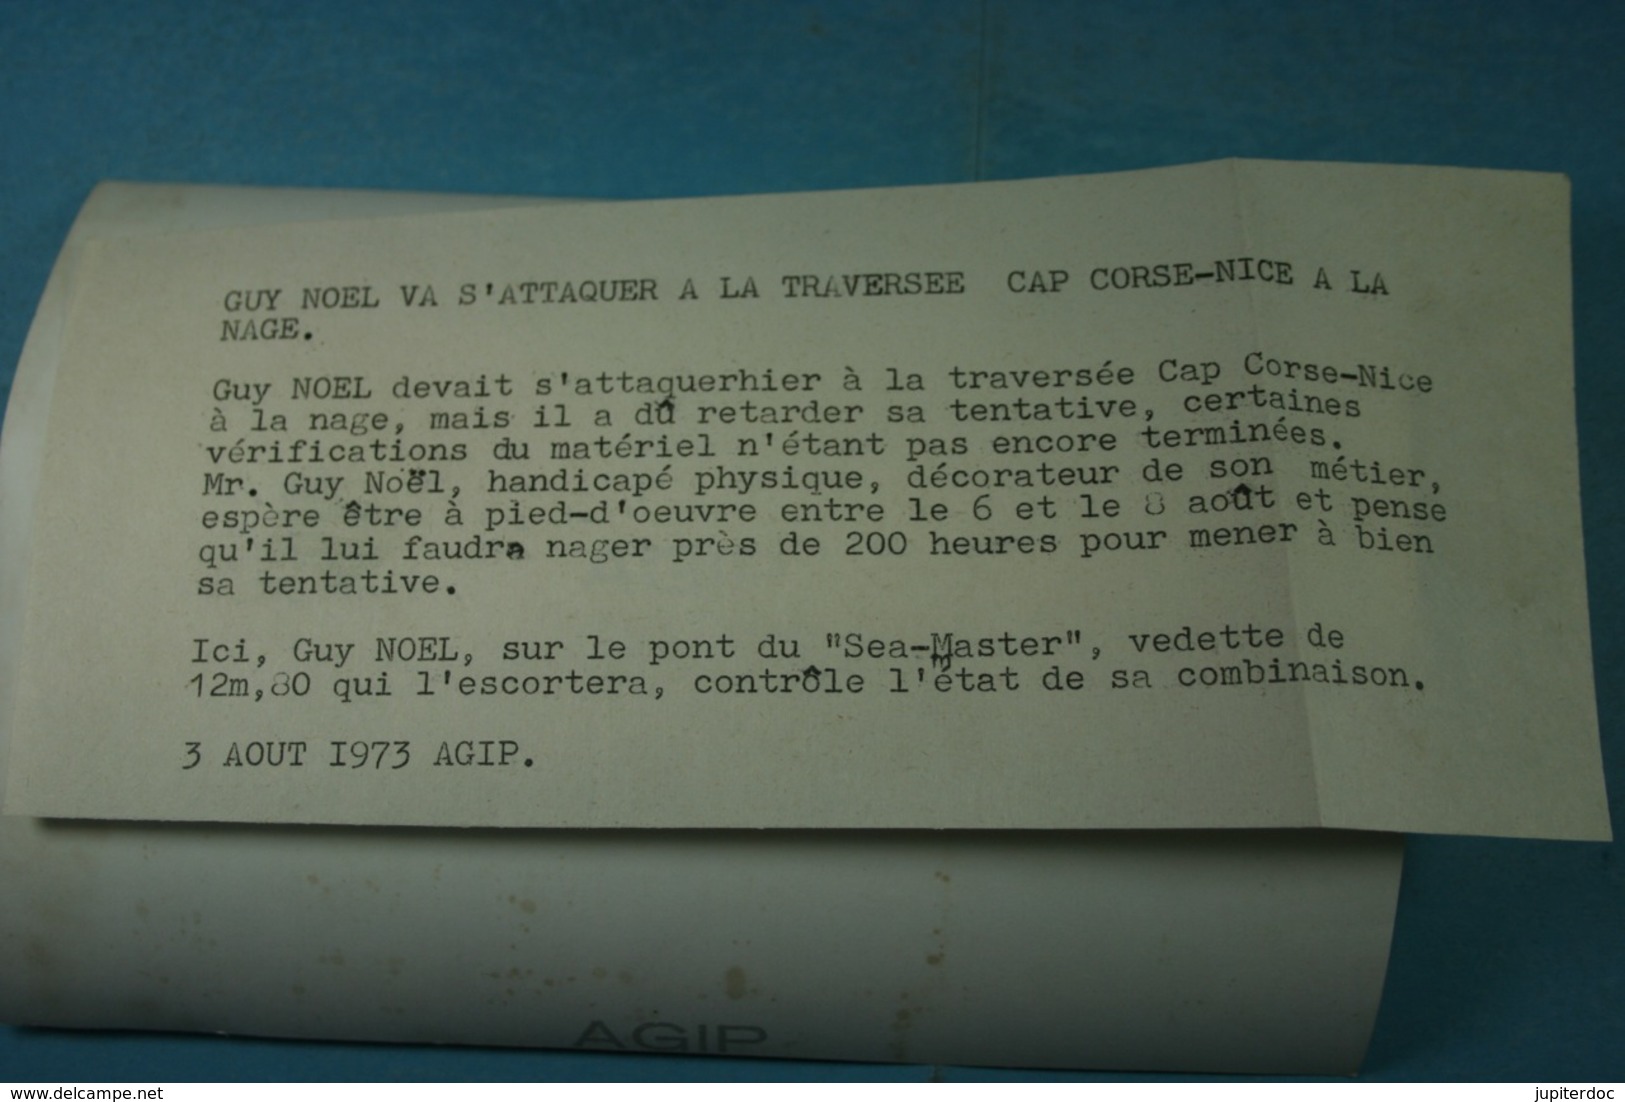 Guy Noël Va S'attaquer à Le Traversée Cap Corse-Nice à La Nage 3/8/73 /24/ - Sports